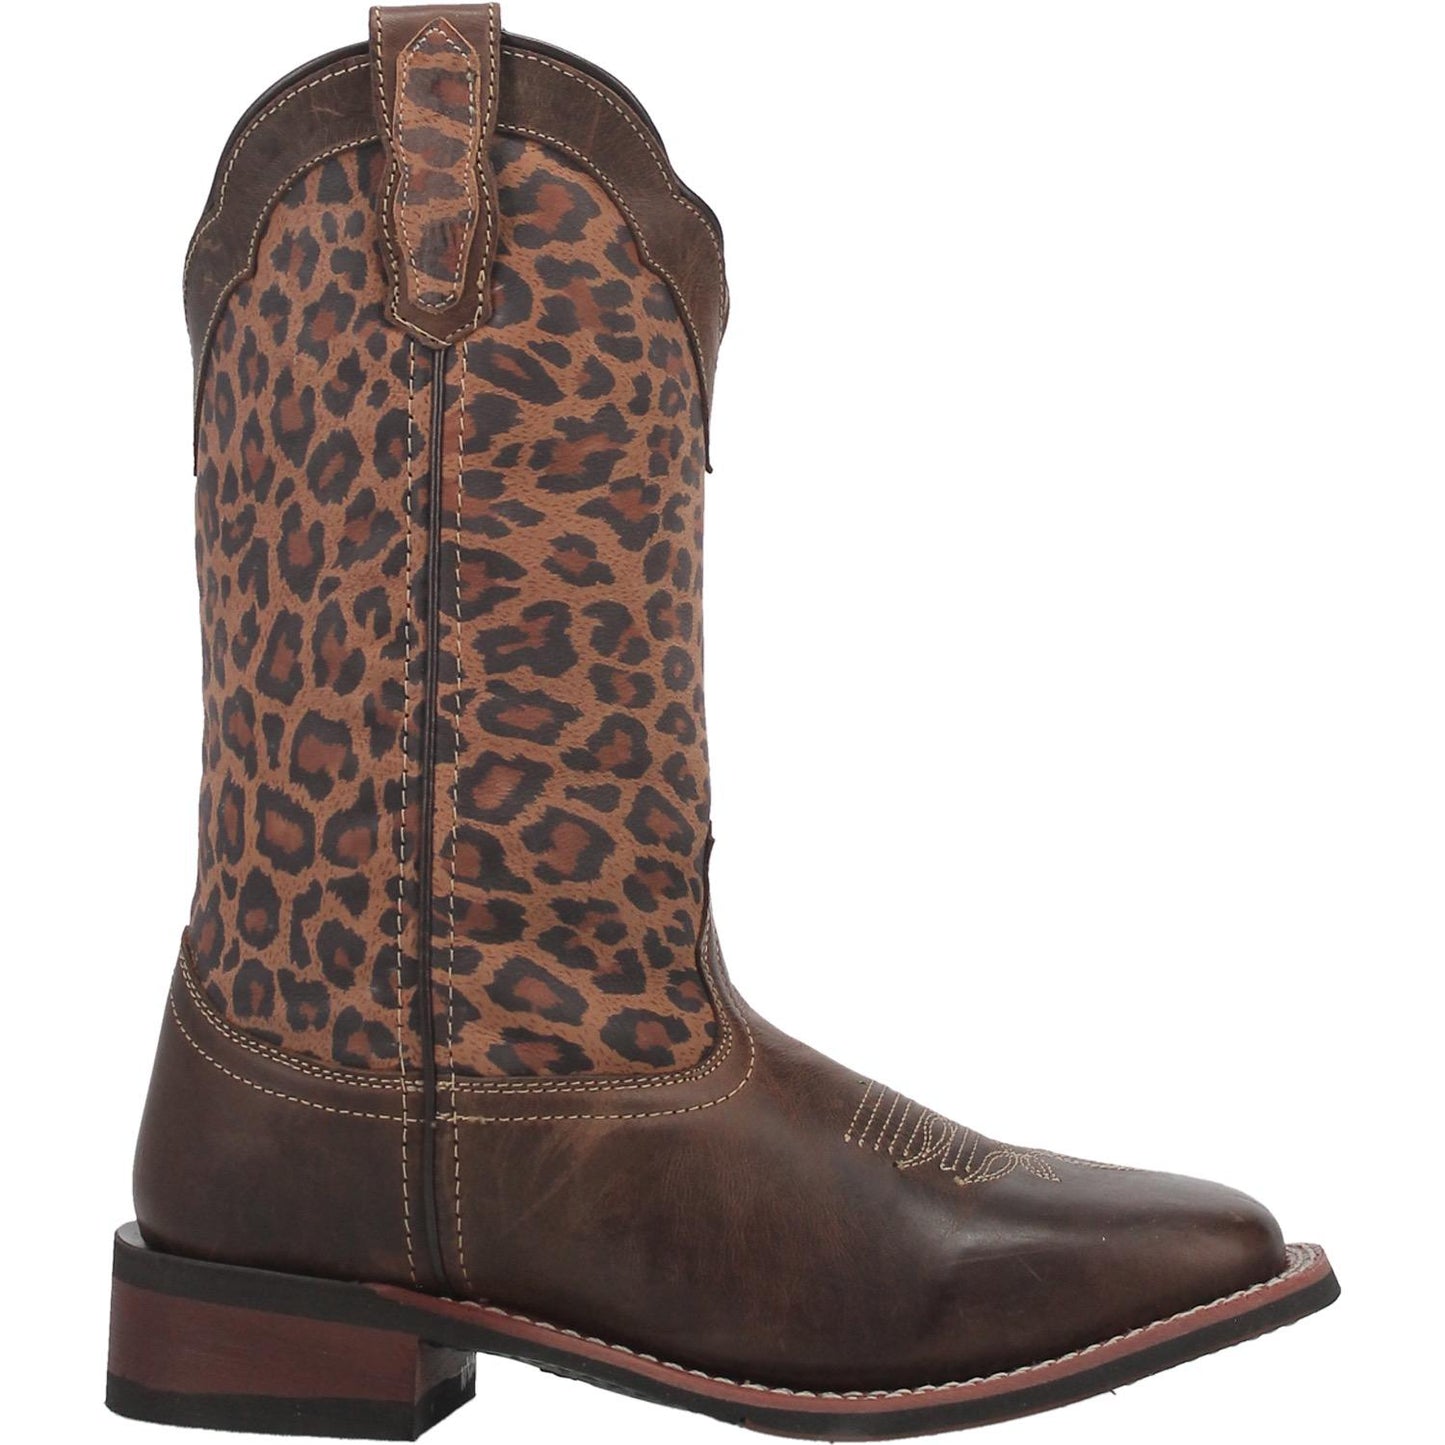 Laredo Ladies Astras Cheetah Print Square Toe Tan Western Boots 5890